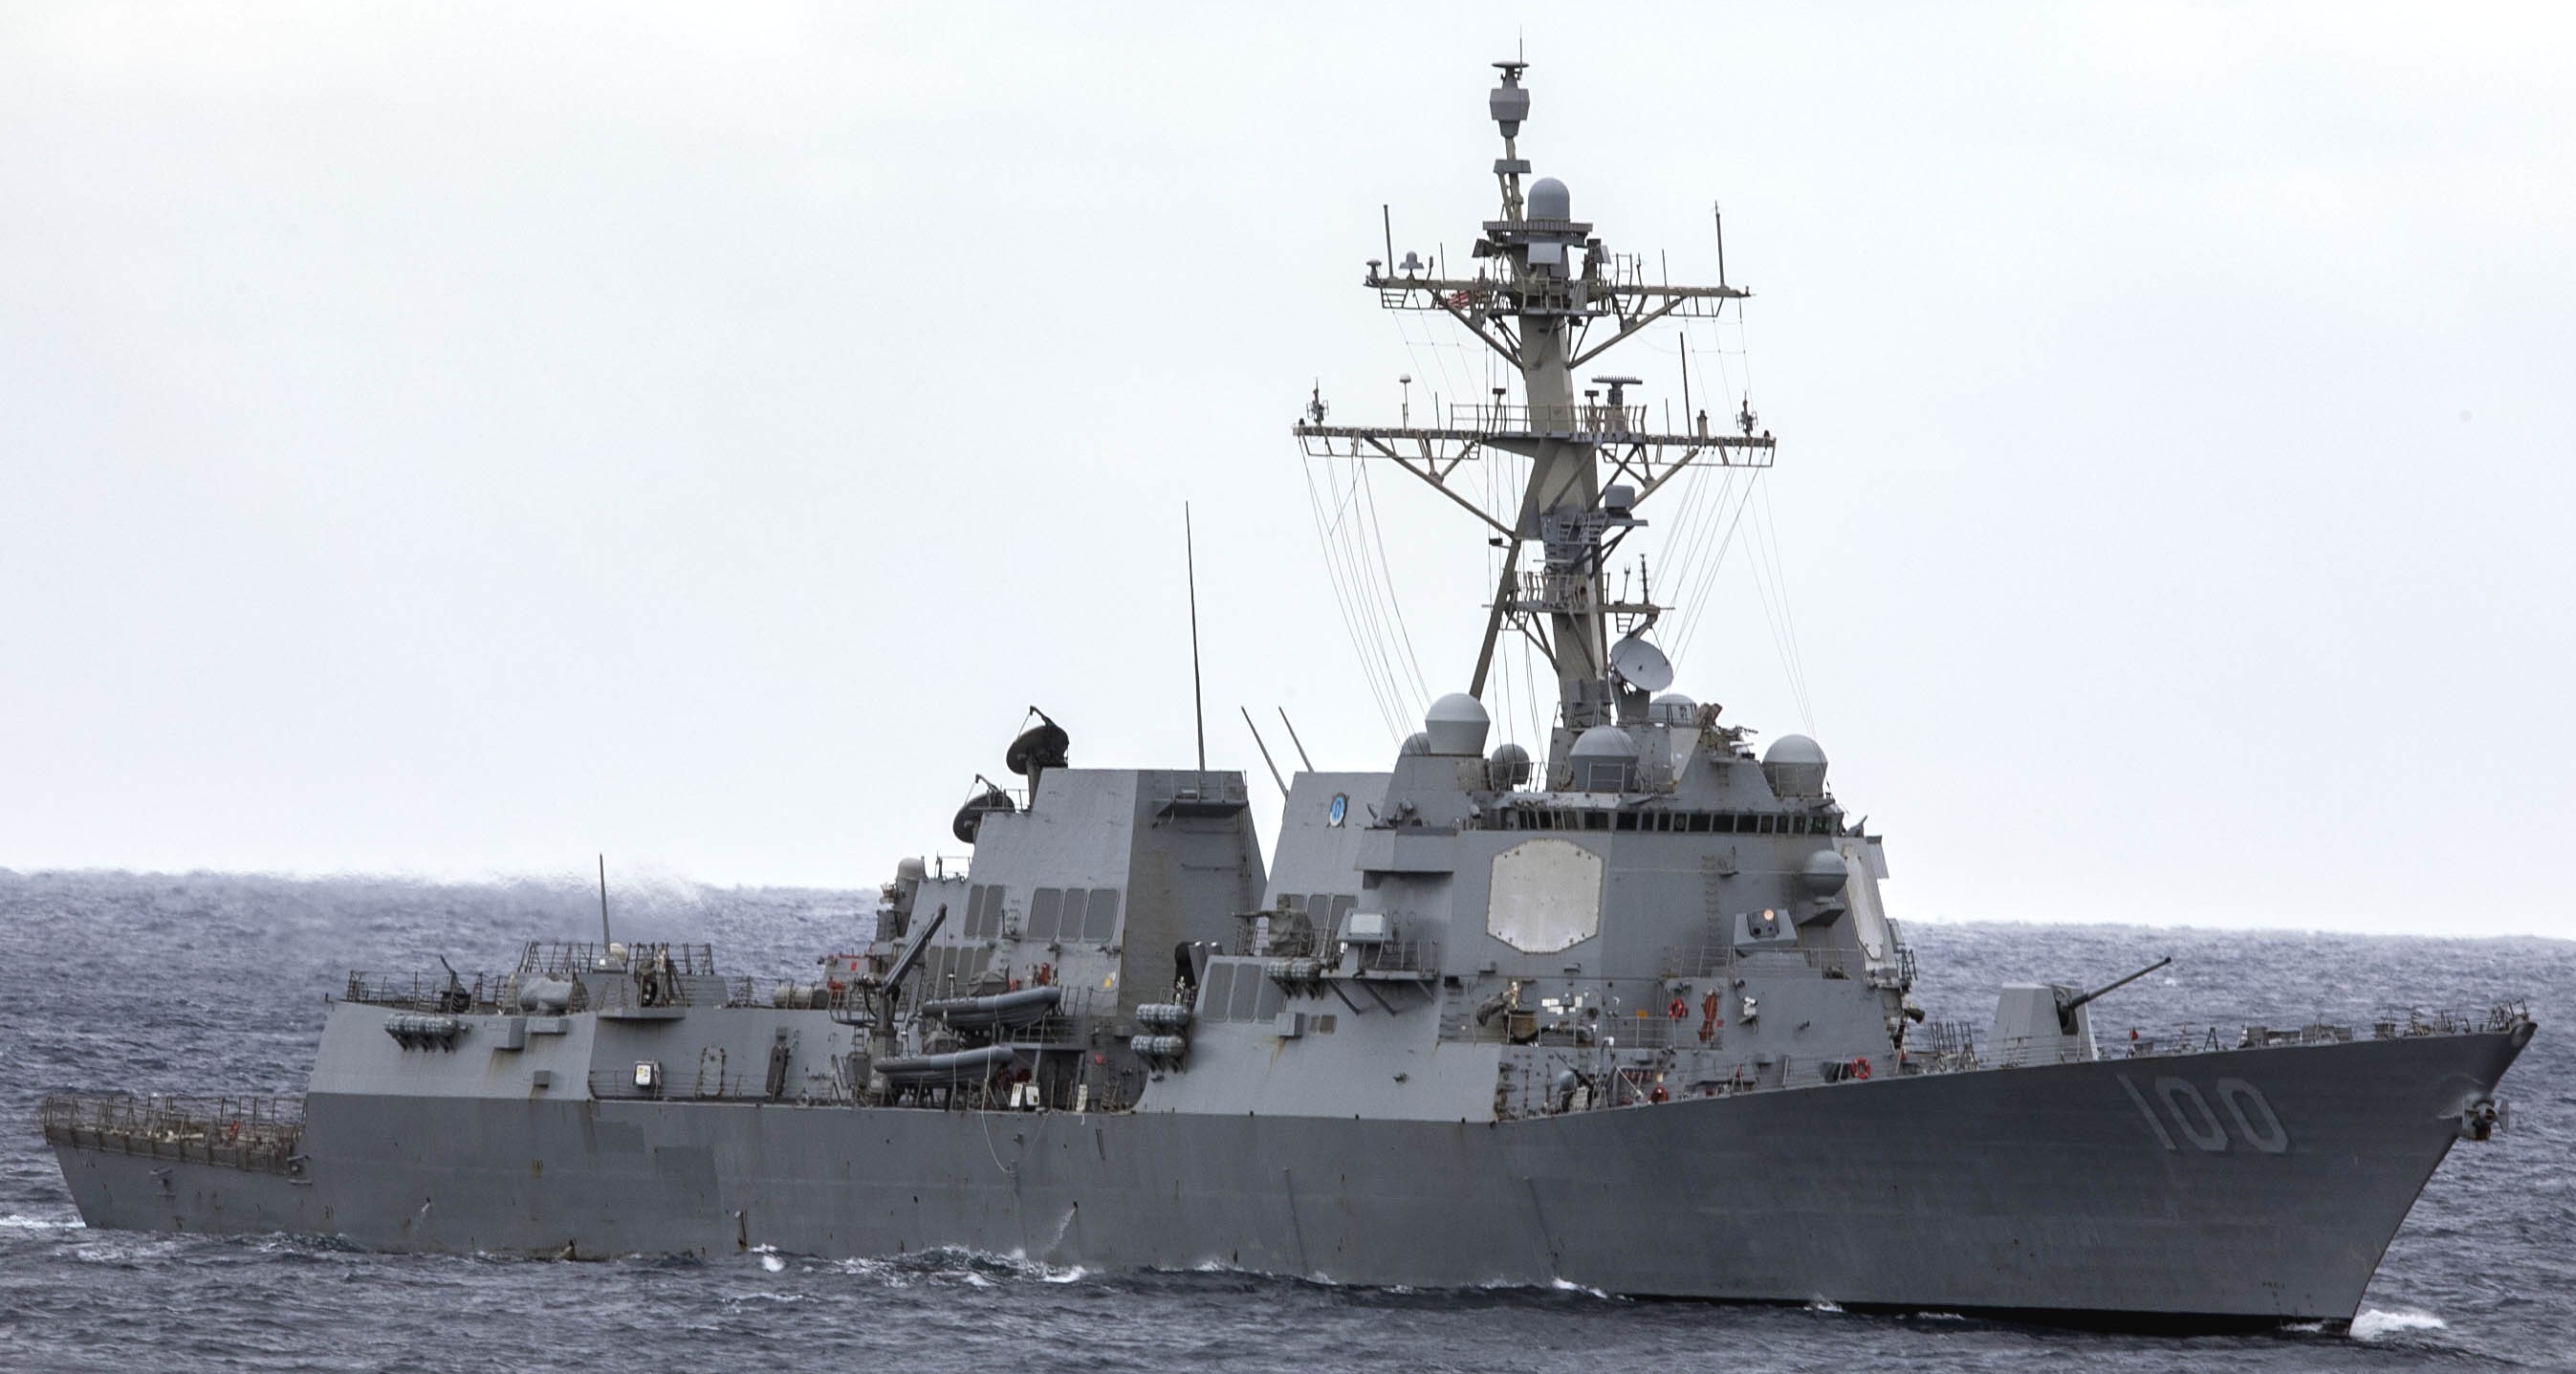 ddg-100 uss kidd arleigh burke class guided missile destroyer aegis us navy philippine sea 67